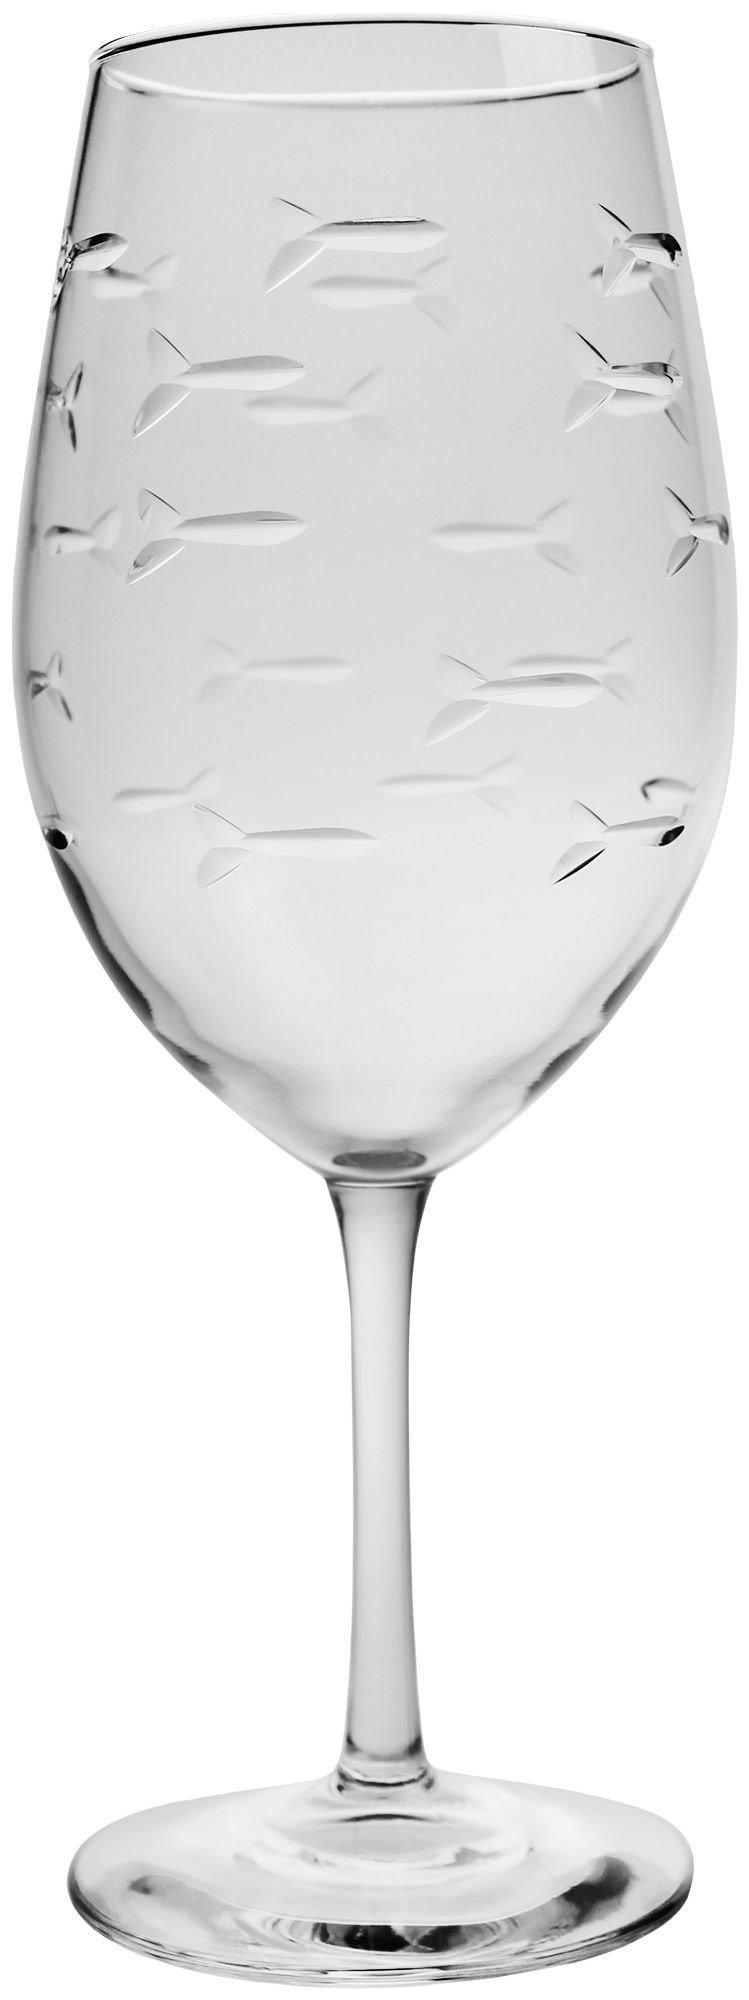 18 oz. School of Fish Wine Glass